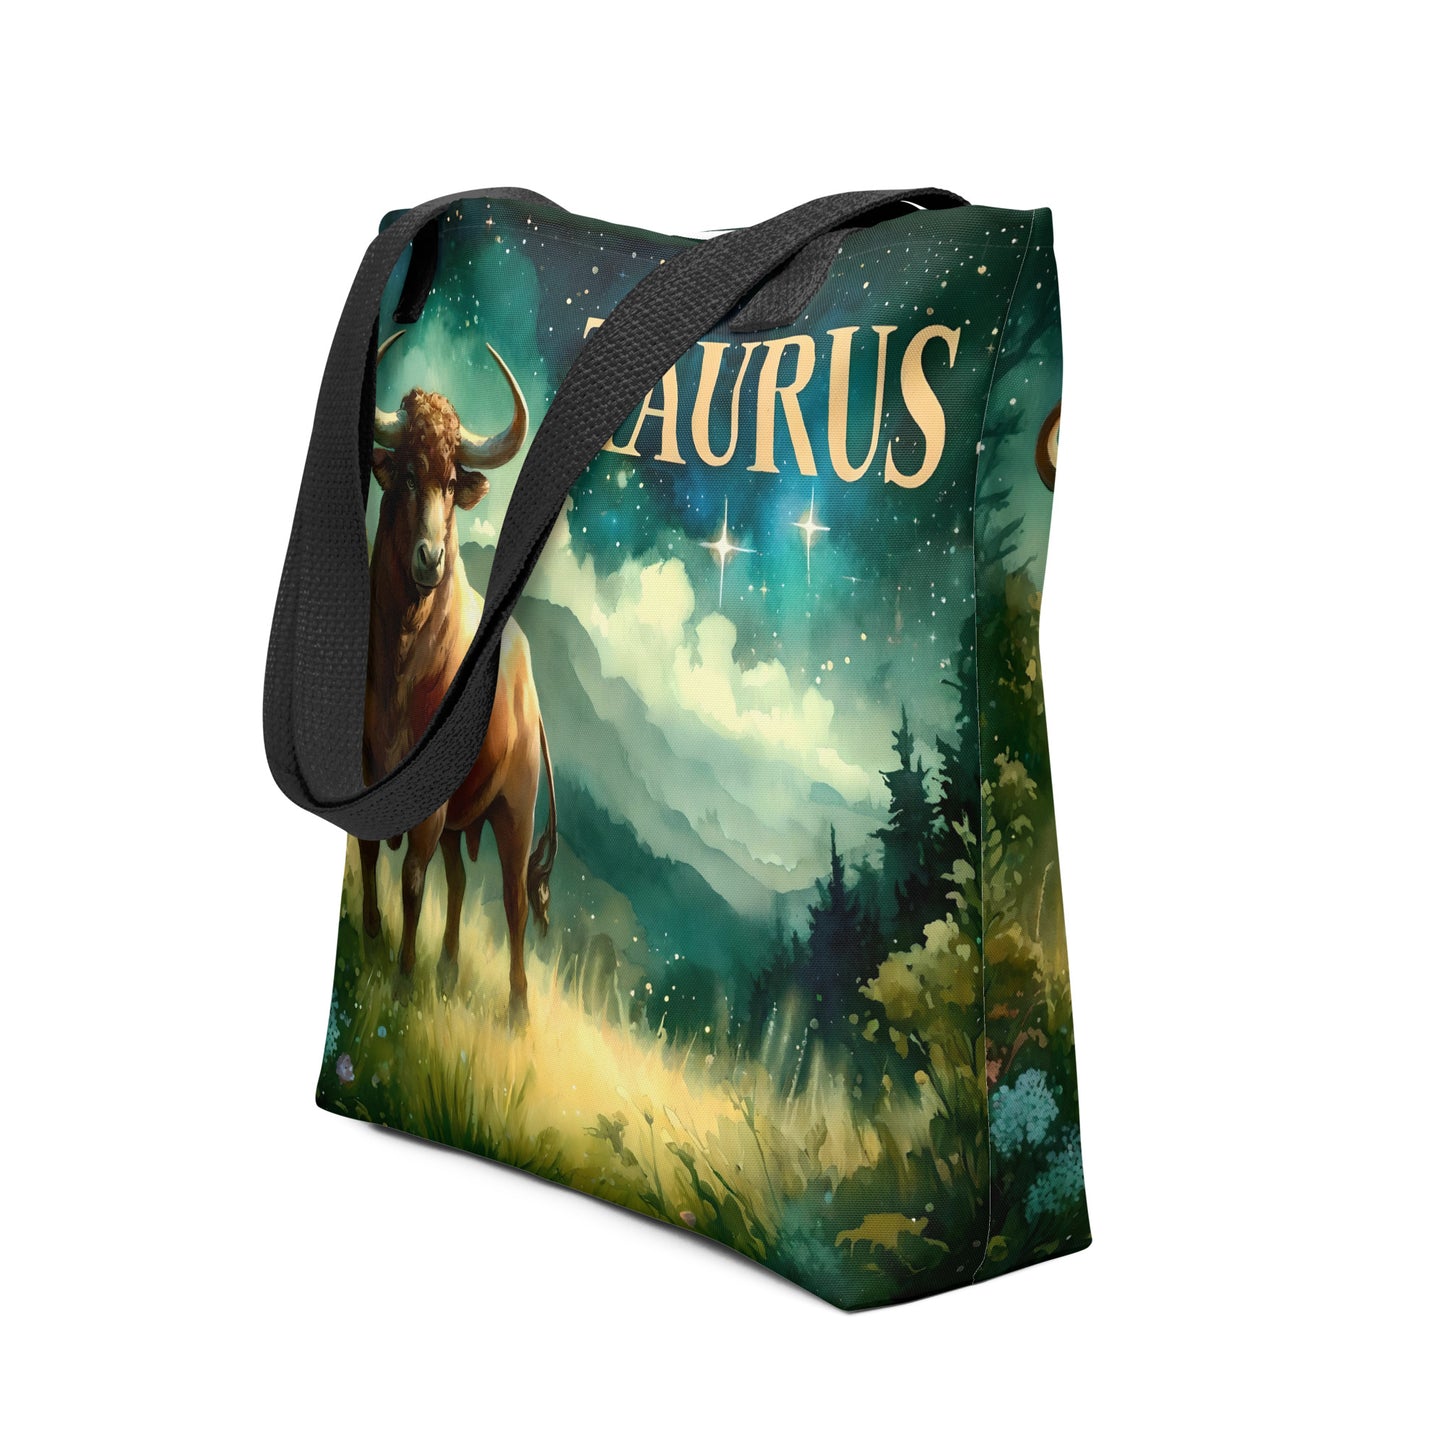 Taurus Horoscope Tote Bag